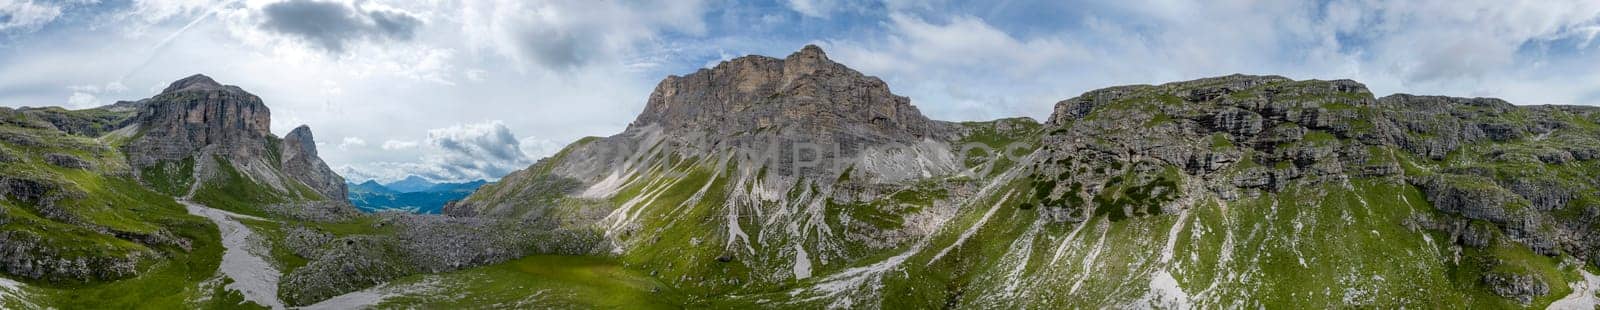 Puez pass Aerial view of Dolomites Alps near Alta Badia, Trentino-Alto-Adige region, Italy. Summer season.